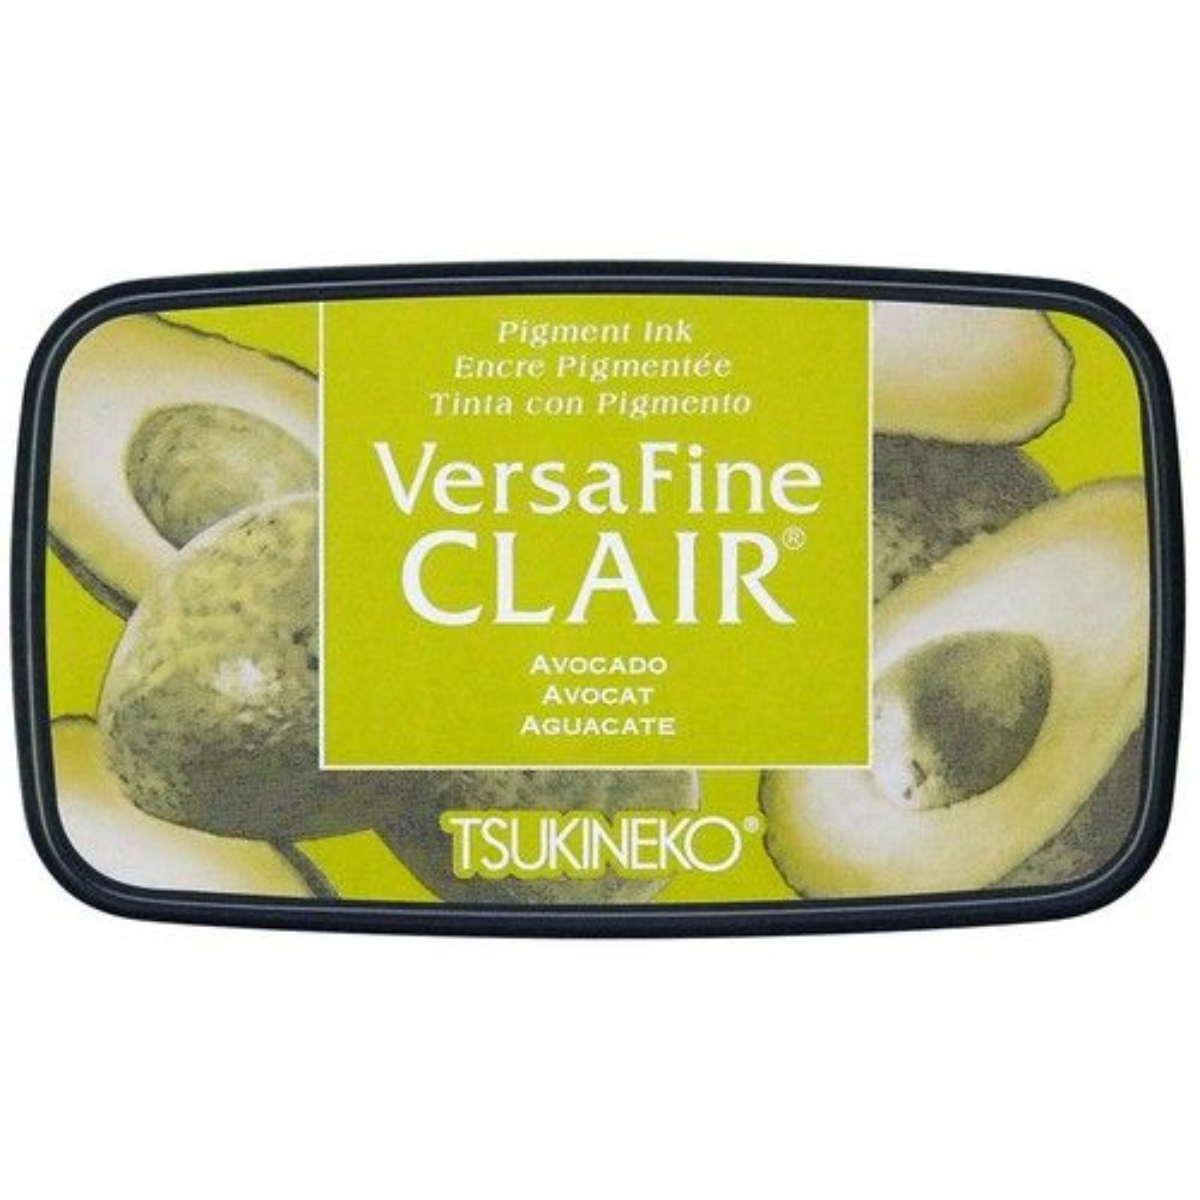 VersaFine Clair – Avocado